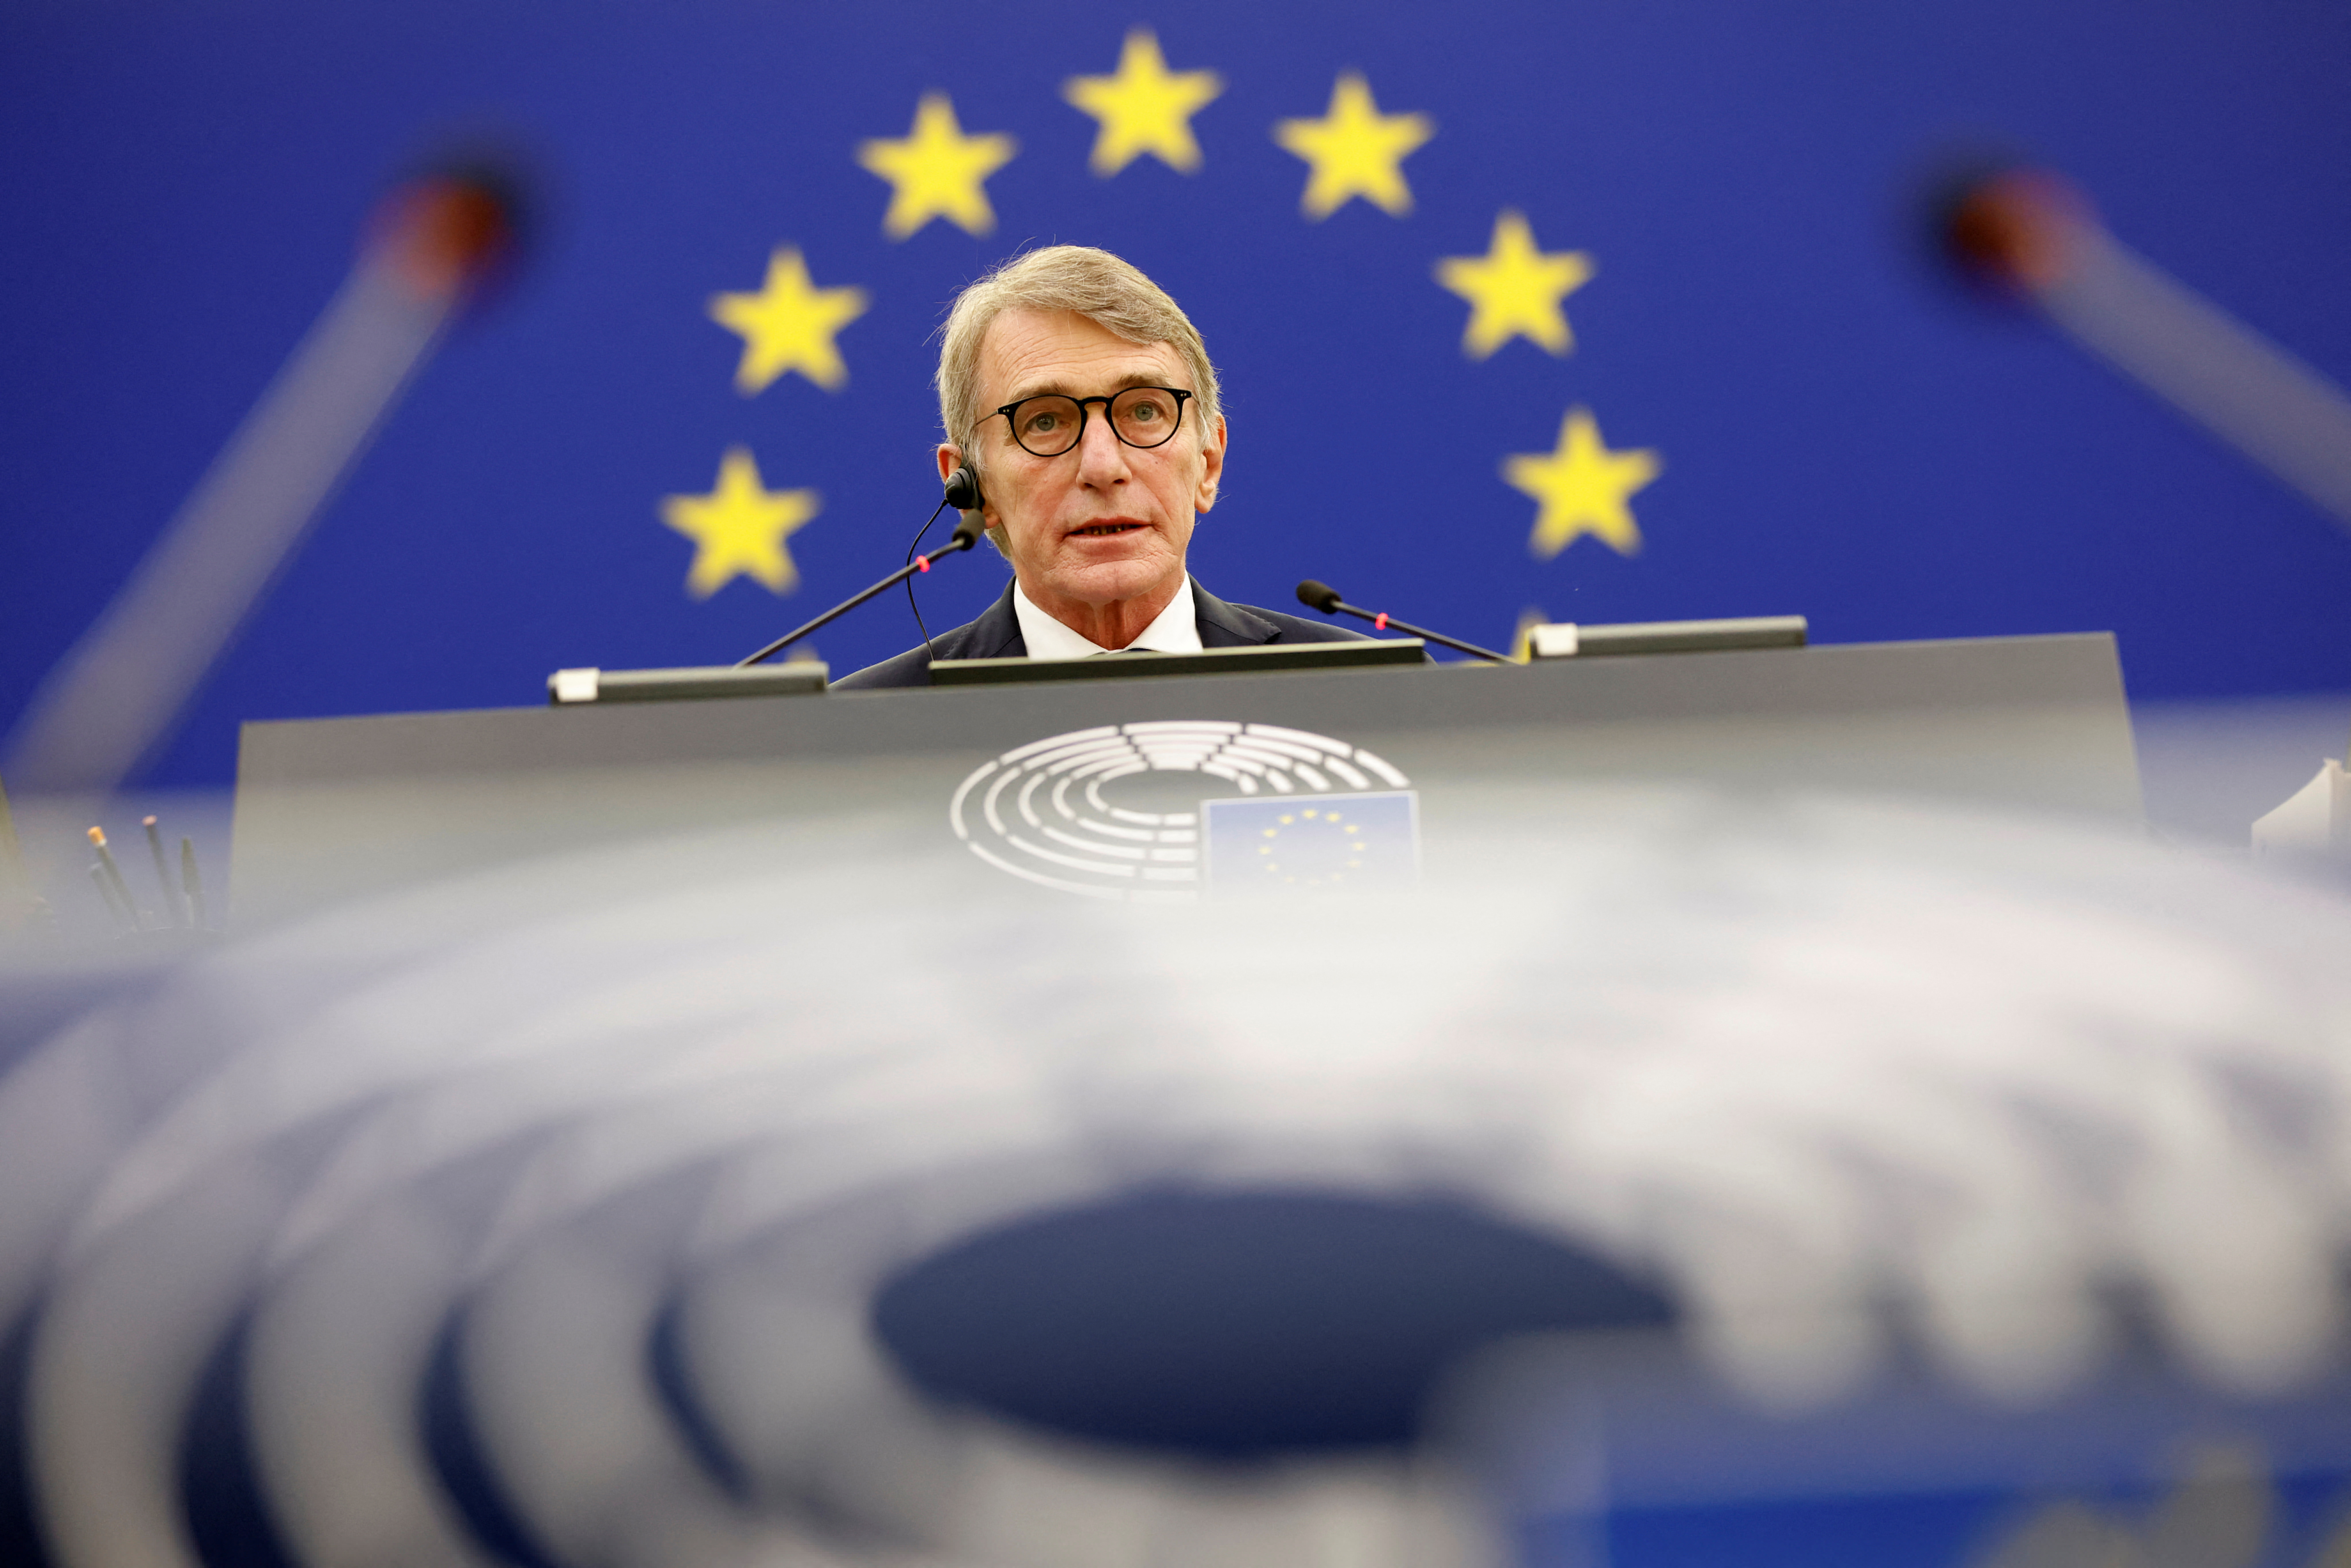 European Parliament President David Sassoli chairs a plenary session at the European Parliament